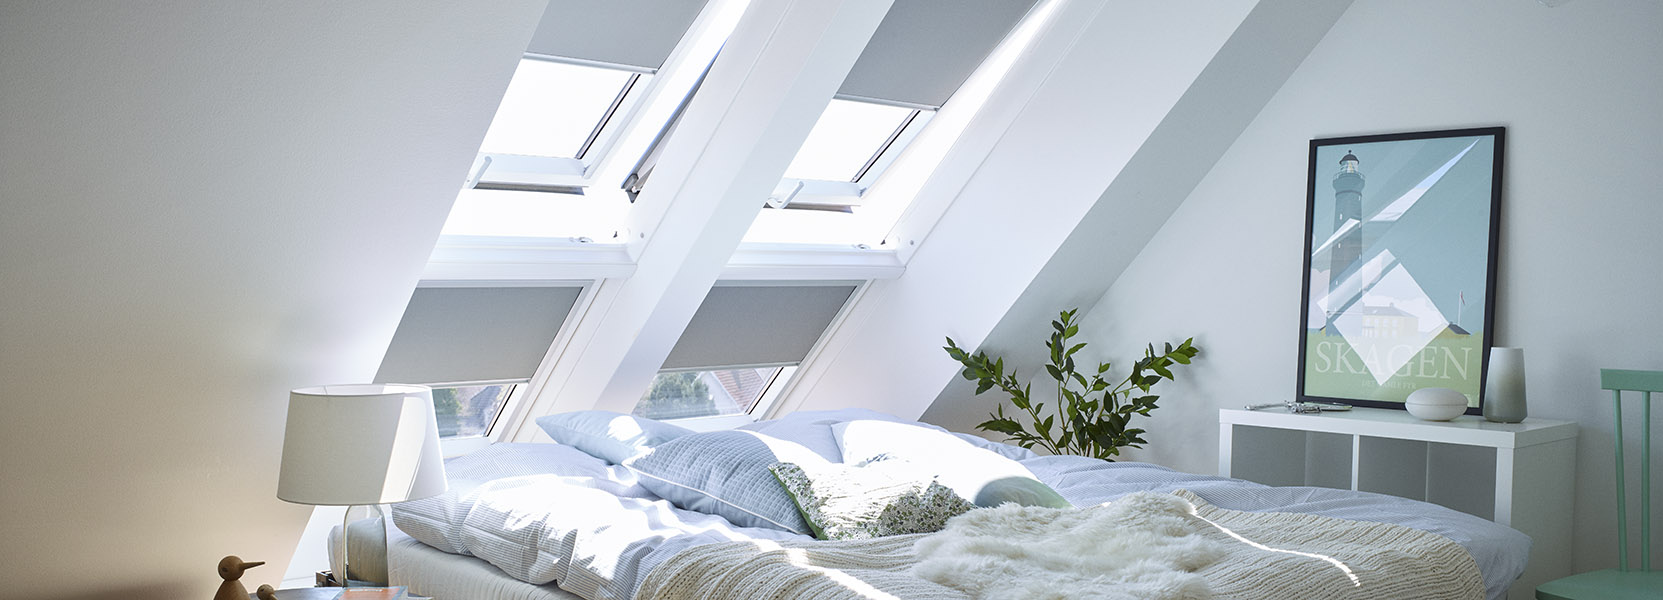 Velux Roof Window Master Bedroom Application